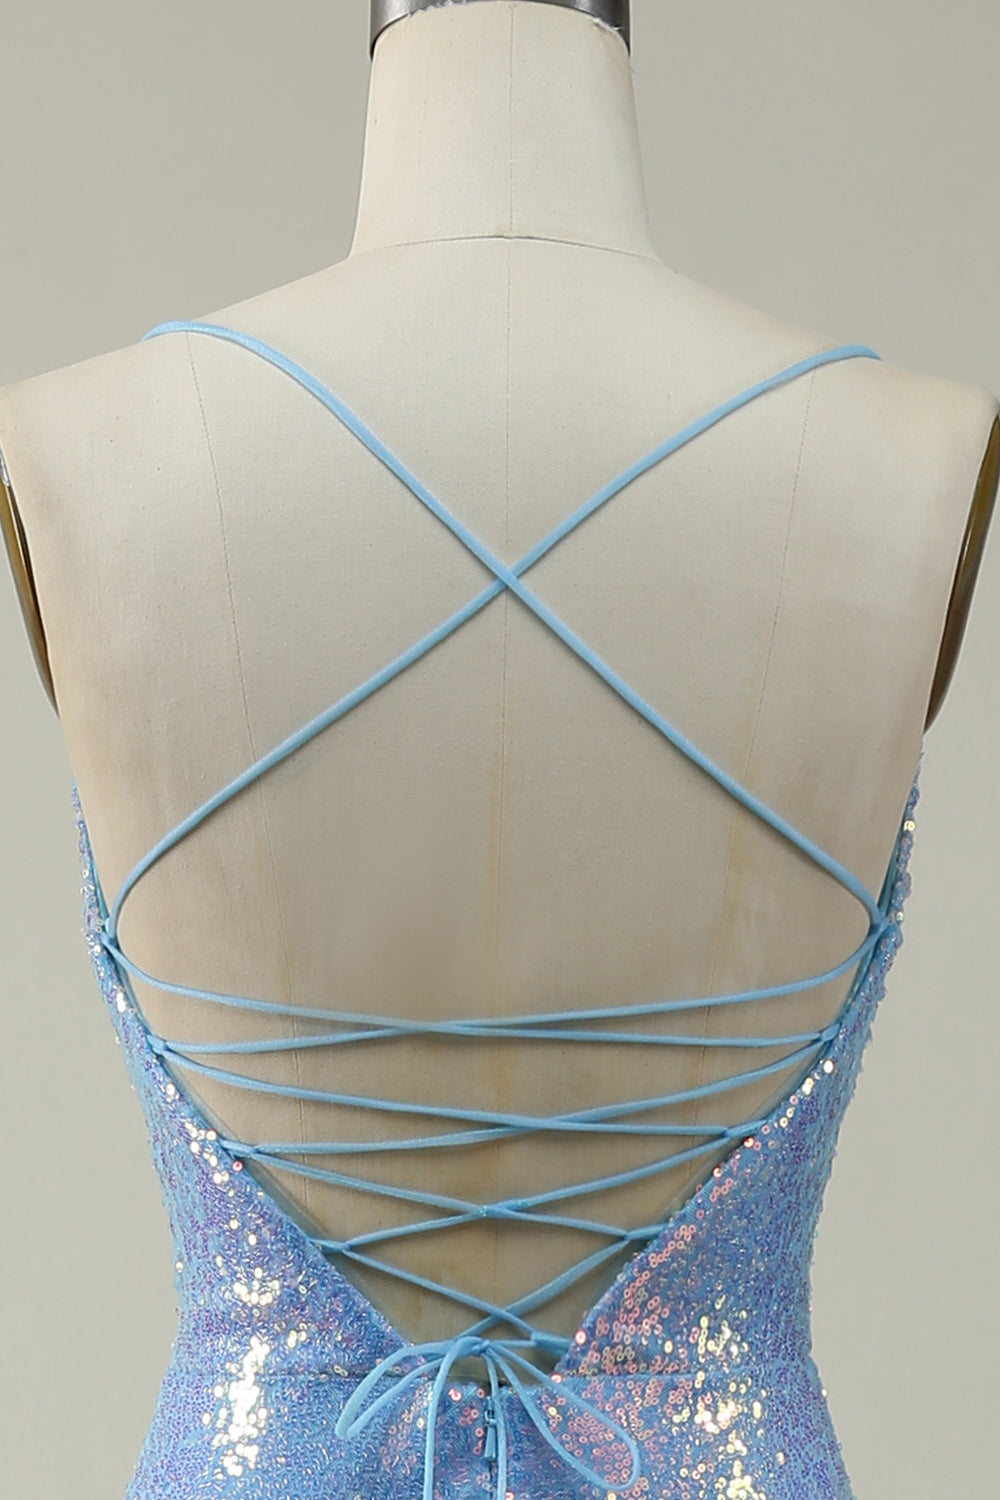 Blue Mermaid Sequined Spaghetti Straps Mermaid Prom Dress